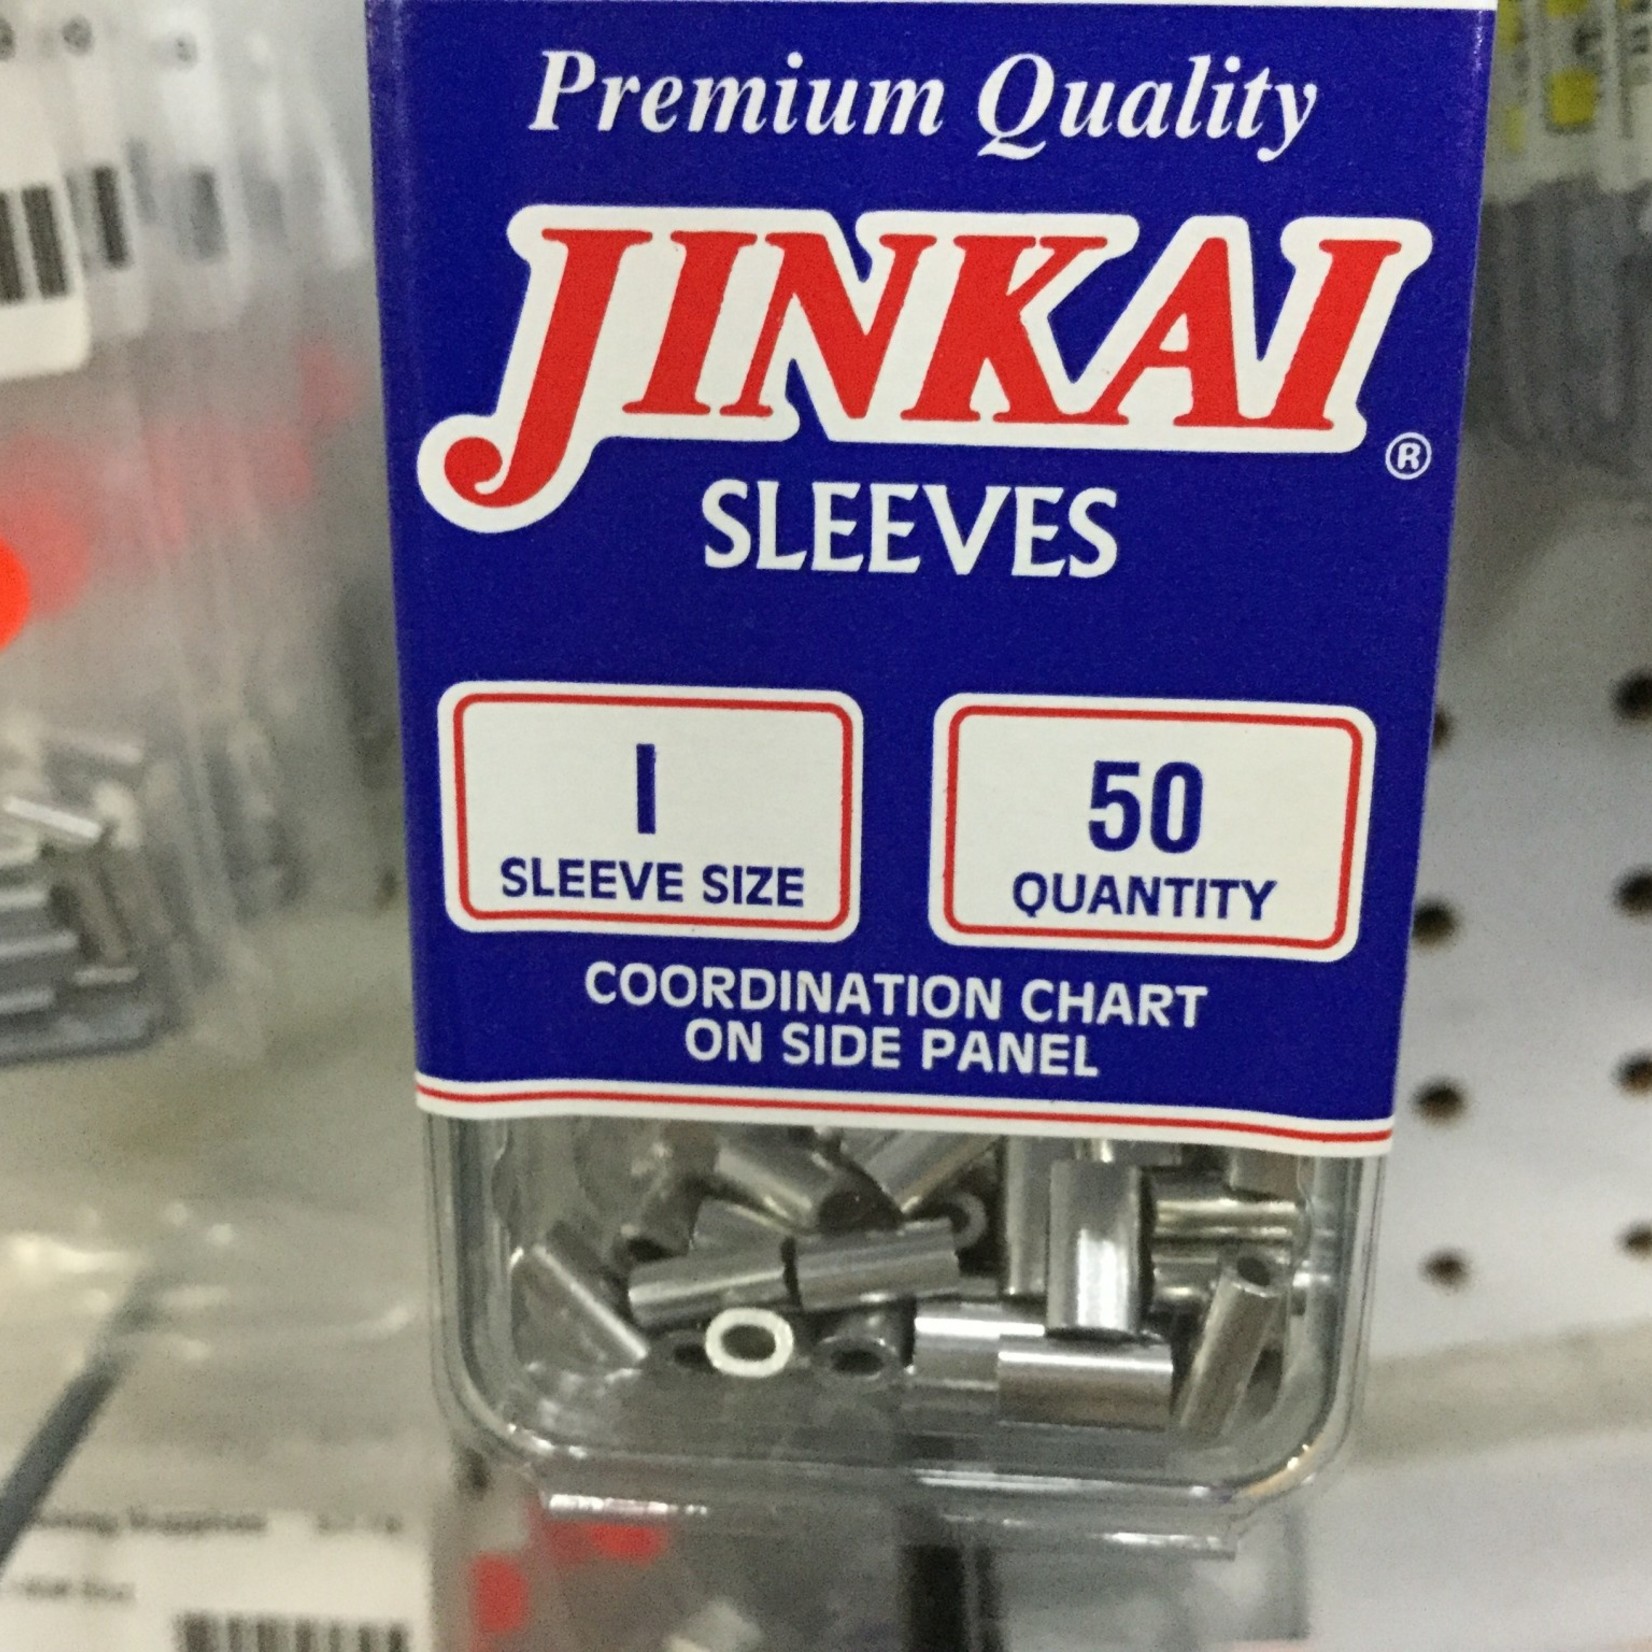 Jinkai Sleeves 50pk